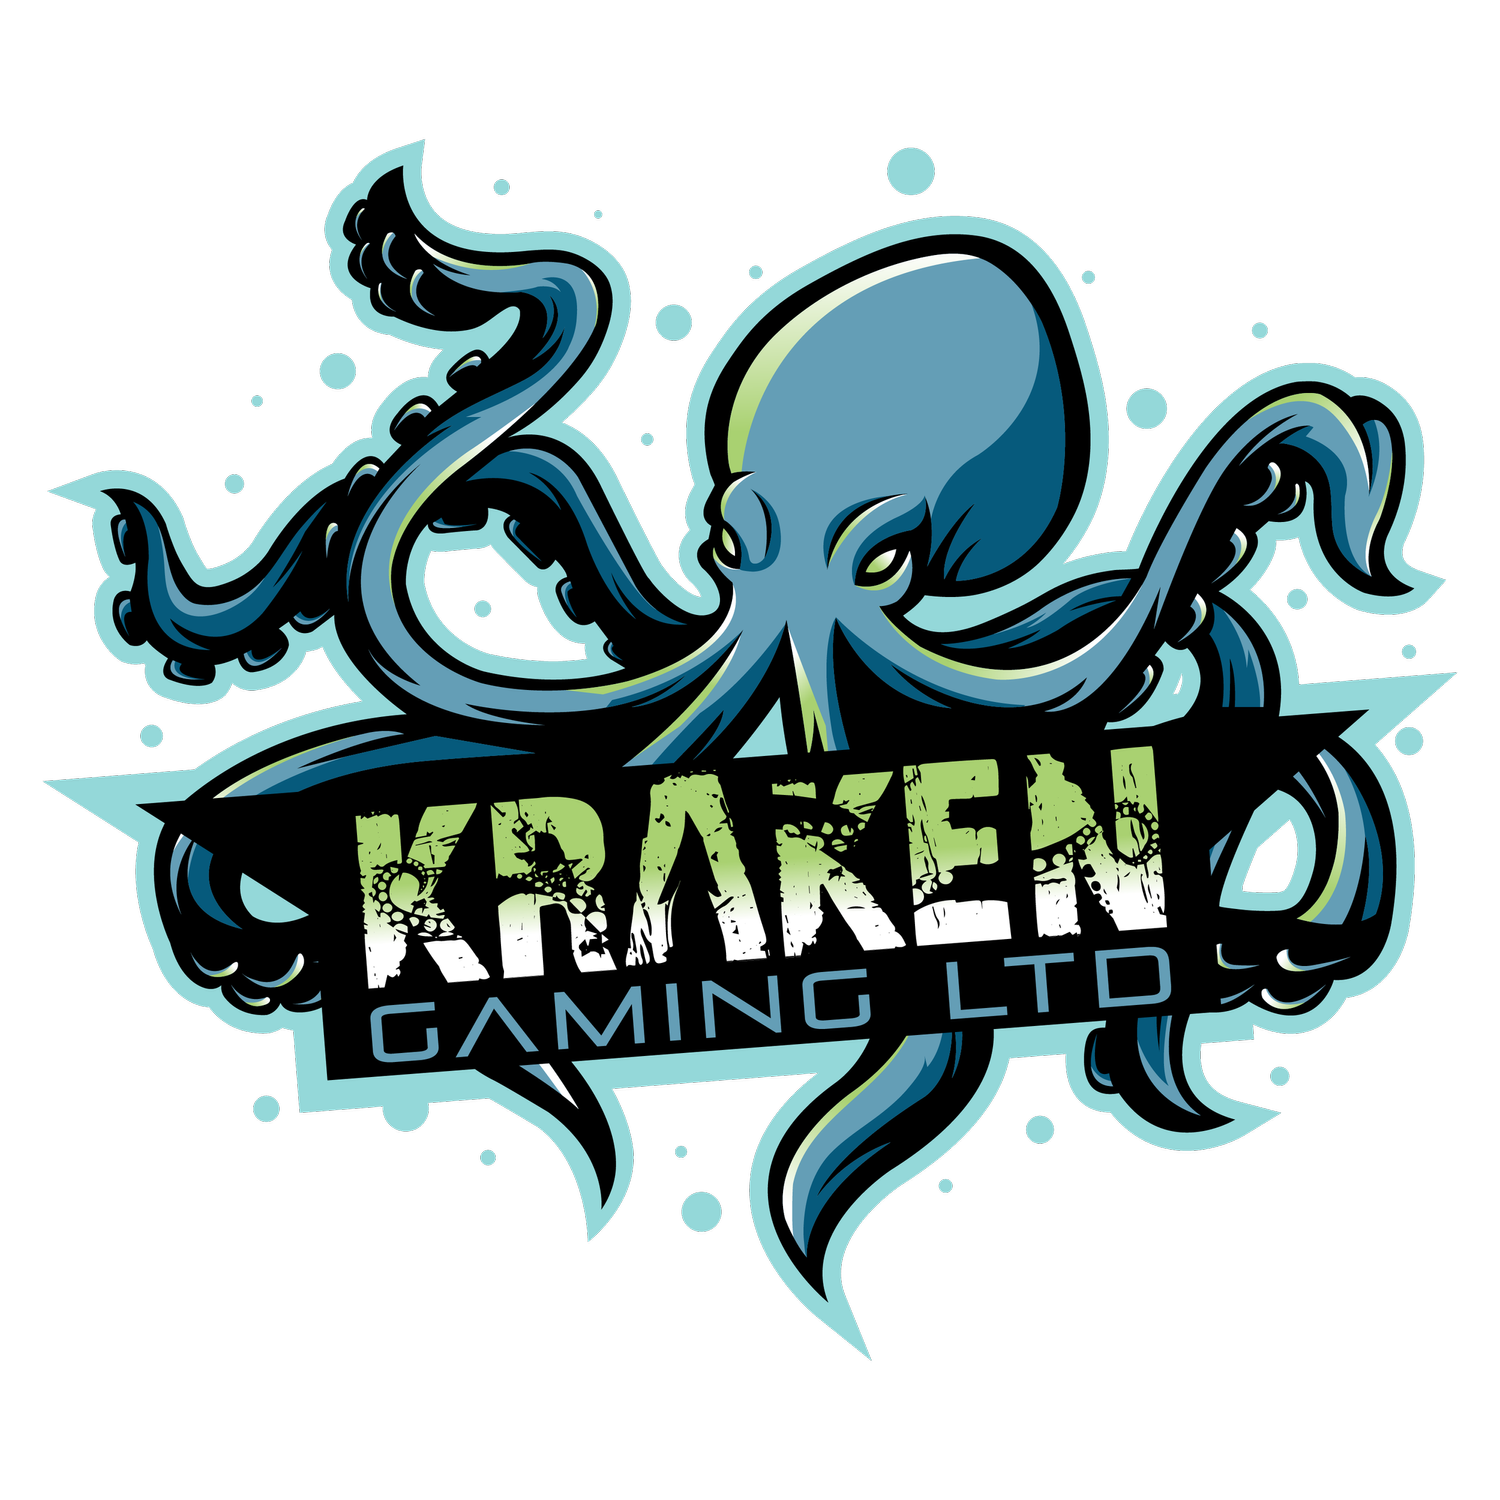 Kraken Gaming Ltd